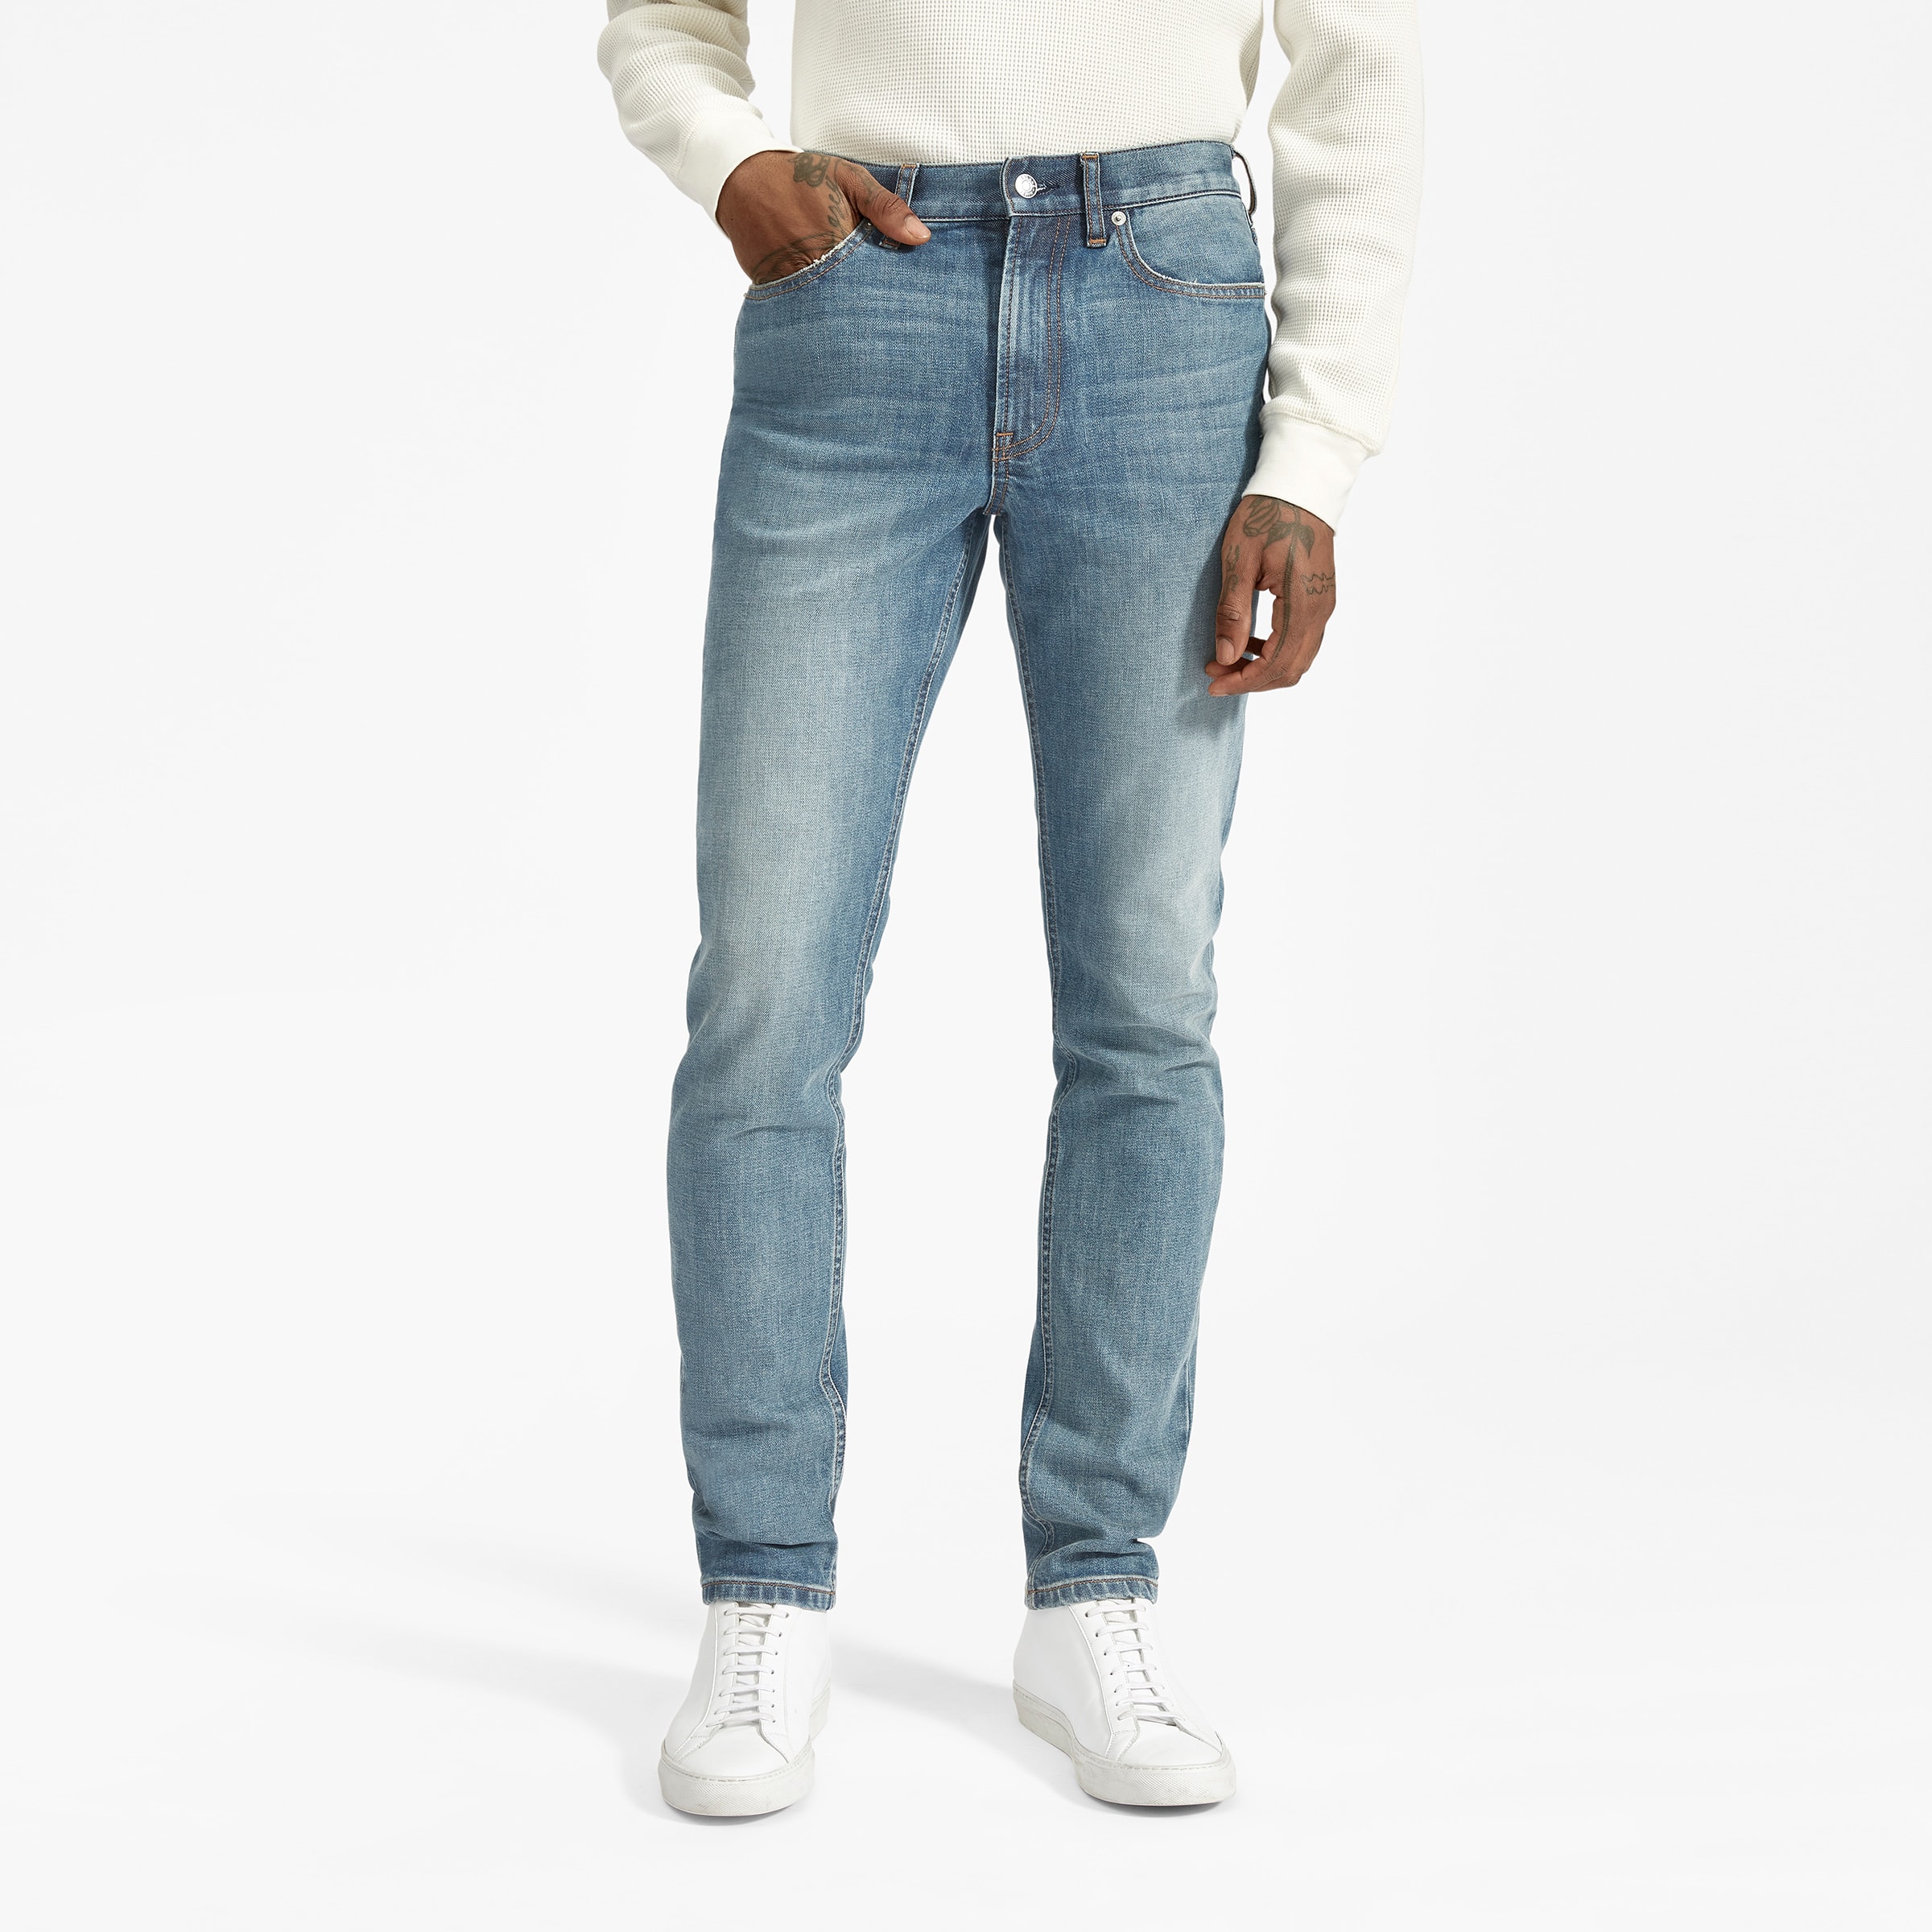 everlane jeans mens